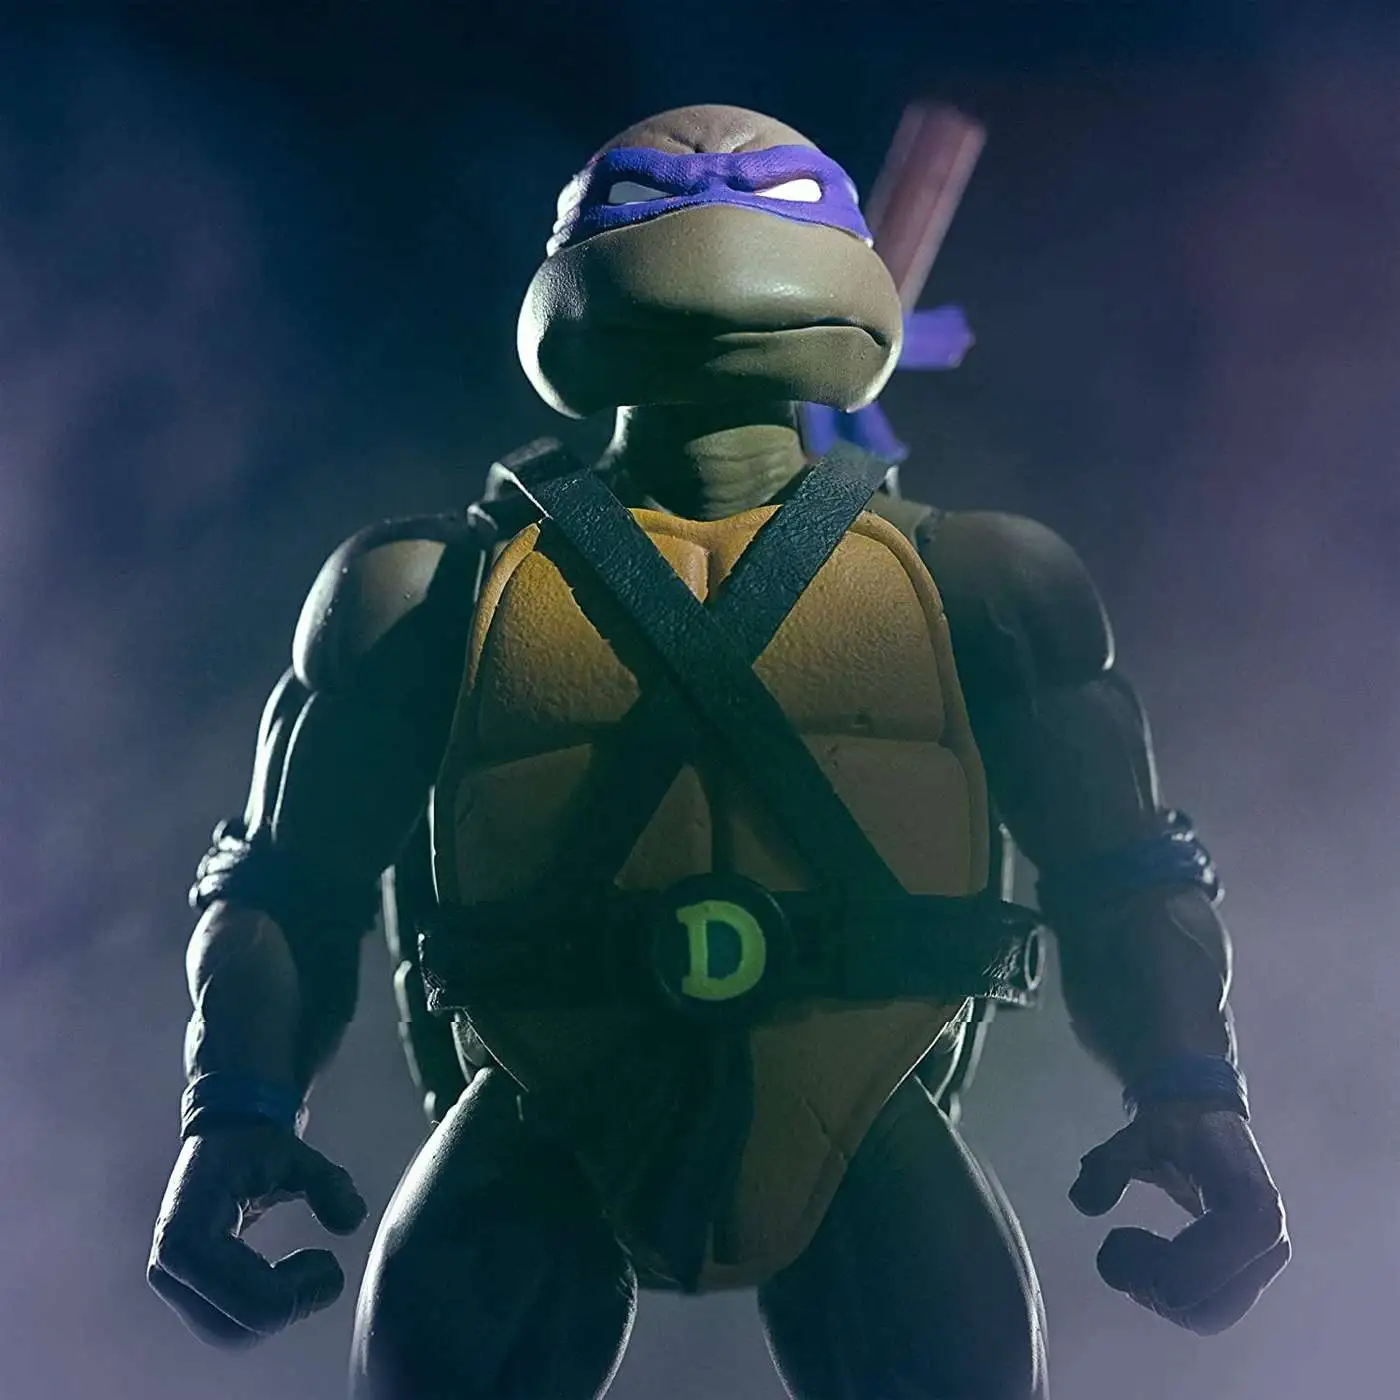 Donatello Teenage Mutant Nina Turtles TMNT 3 3/4 Inch ReAction Figur Super7 